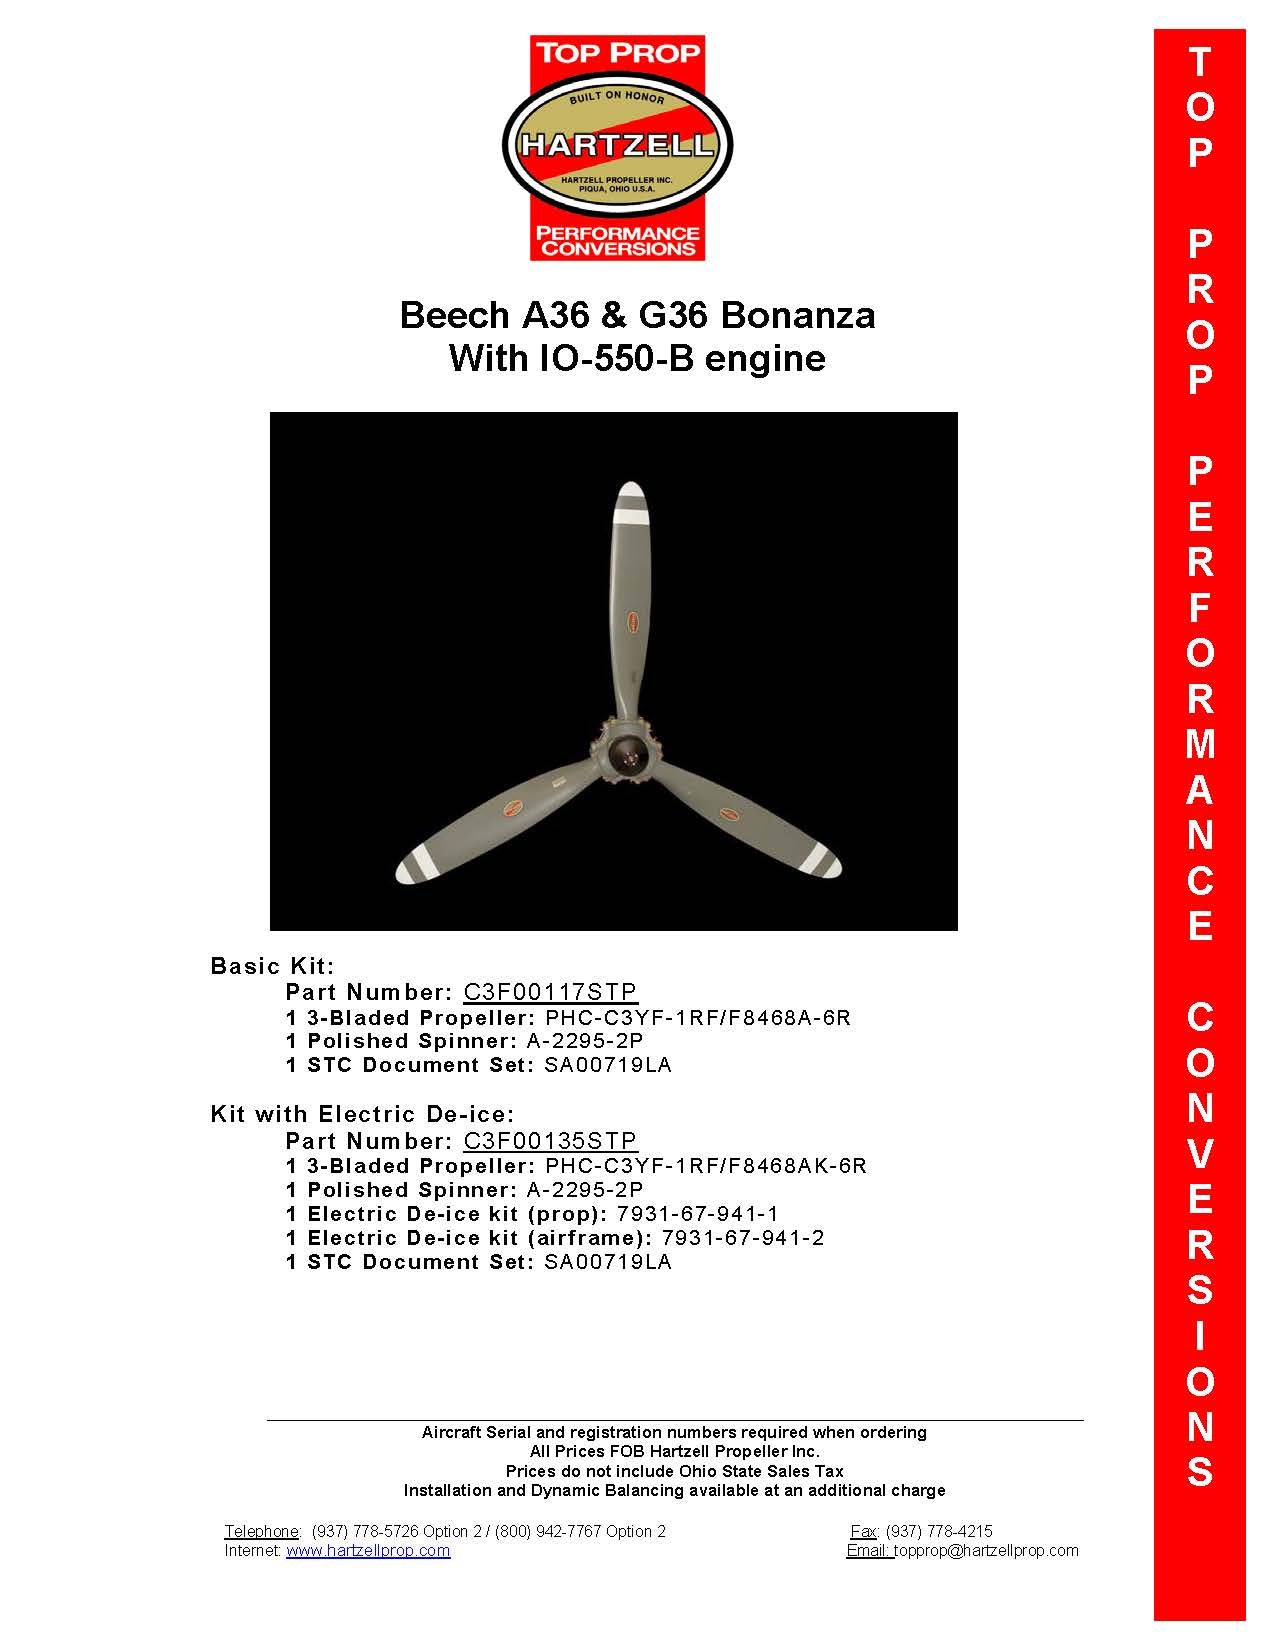 BEECH-A36-C3F00135STP-PAGE-1